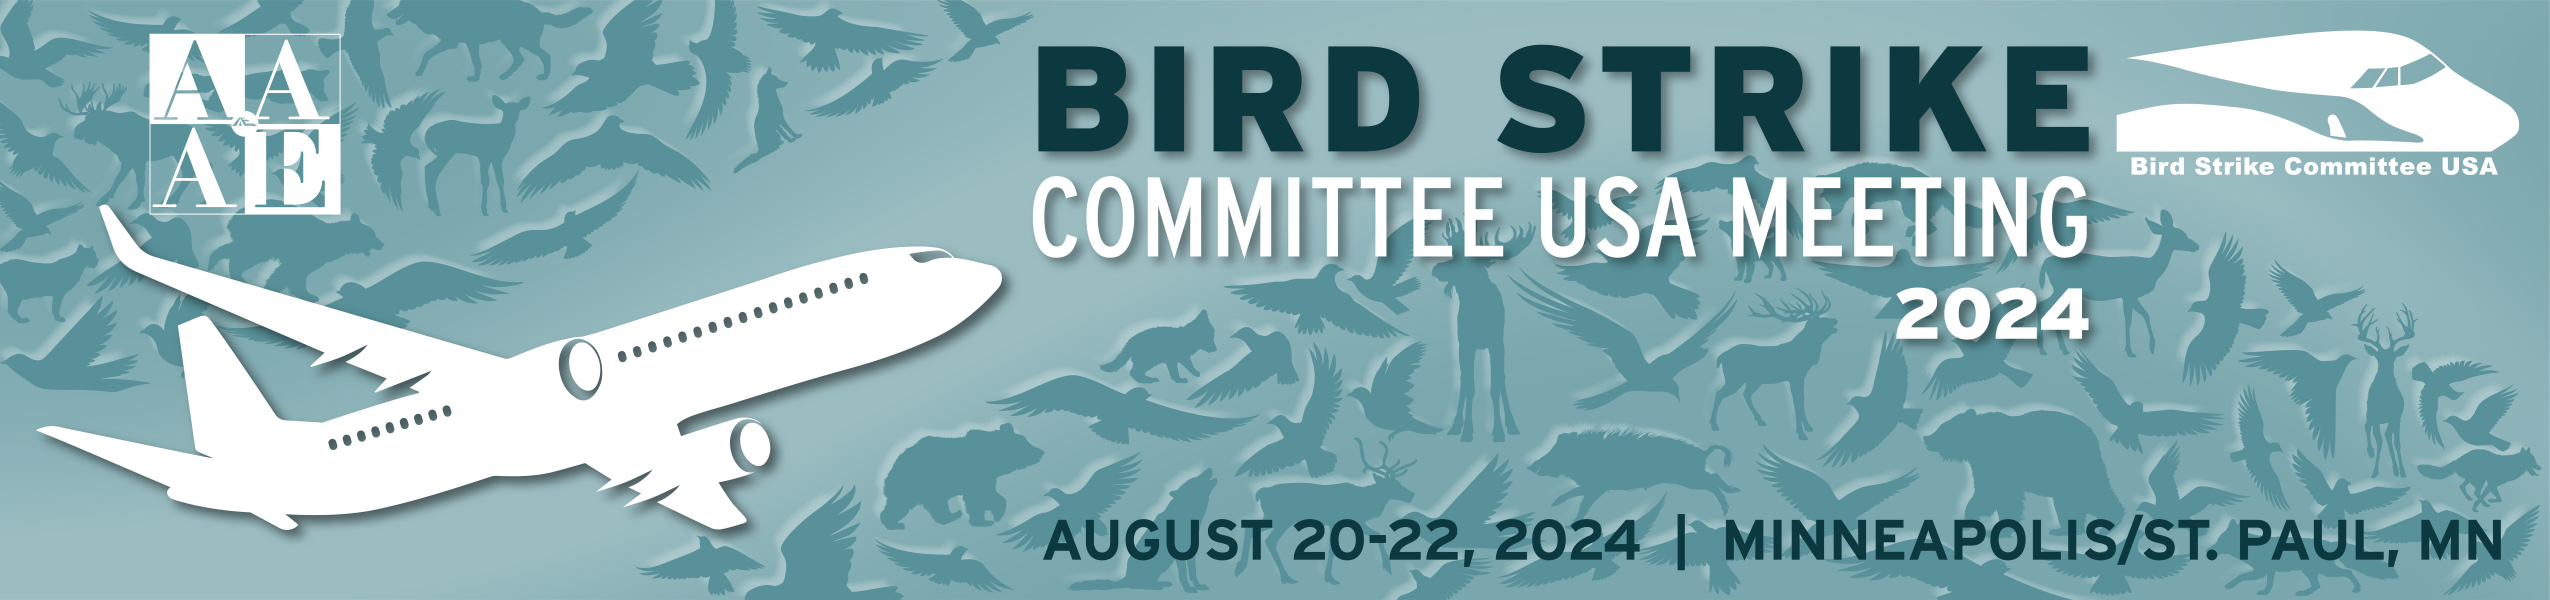 Bird Strike Committee USA Meeting 2024 | August 20-22, 2024 | Minneapolis/St. Paul, MN